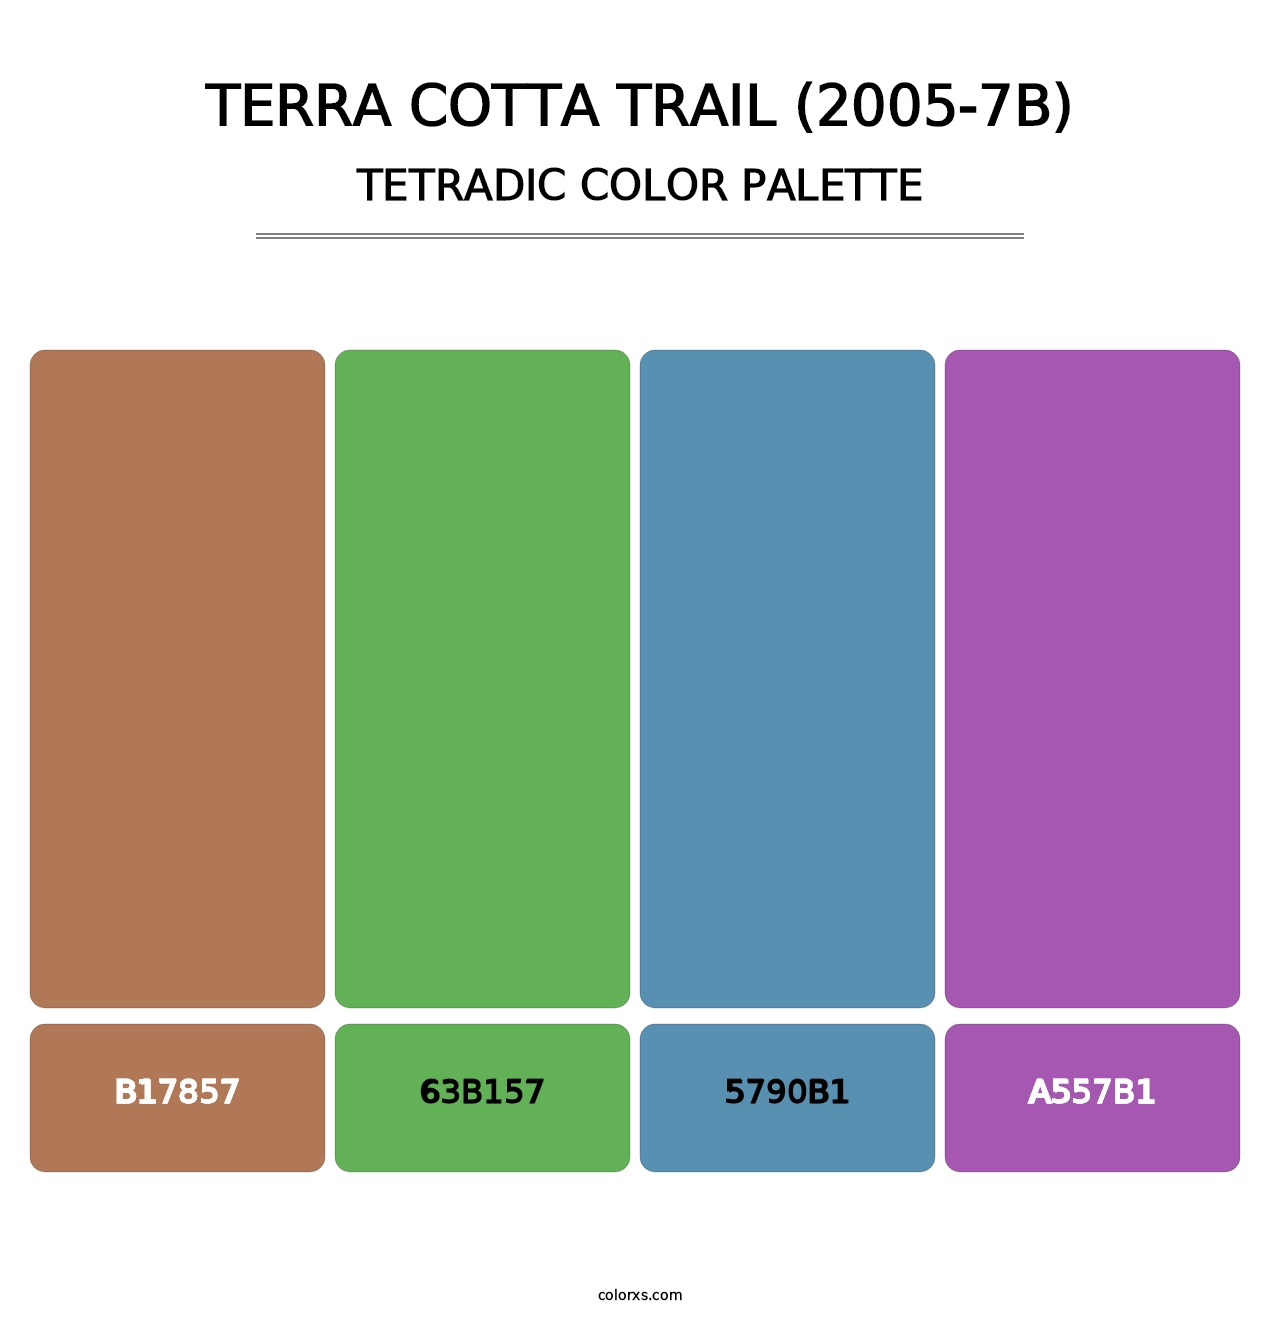 Terra Cotta Trail (2005-7B) - Tetradic Color Palette